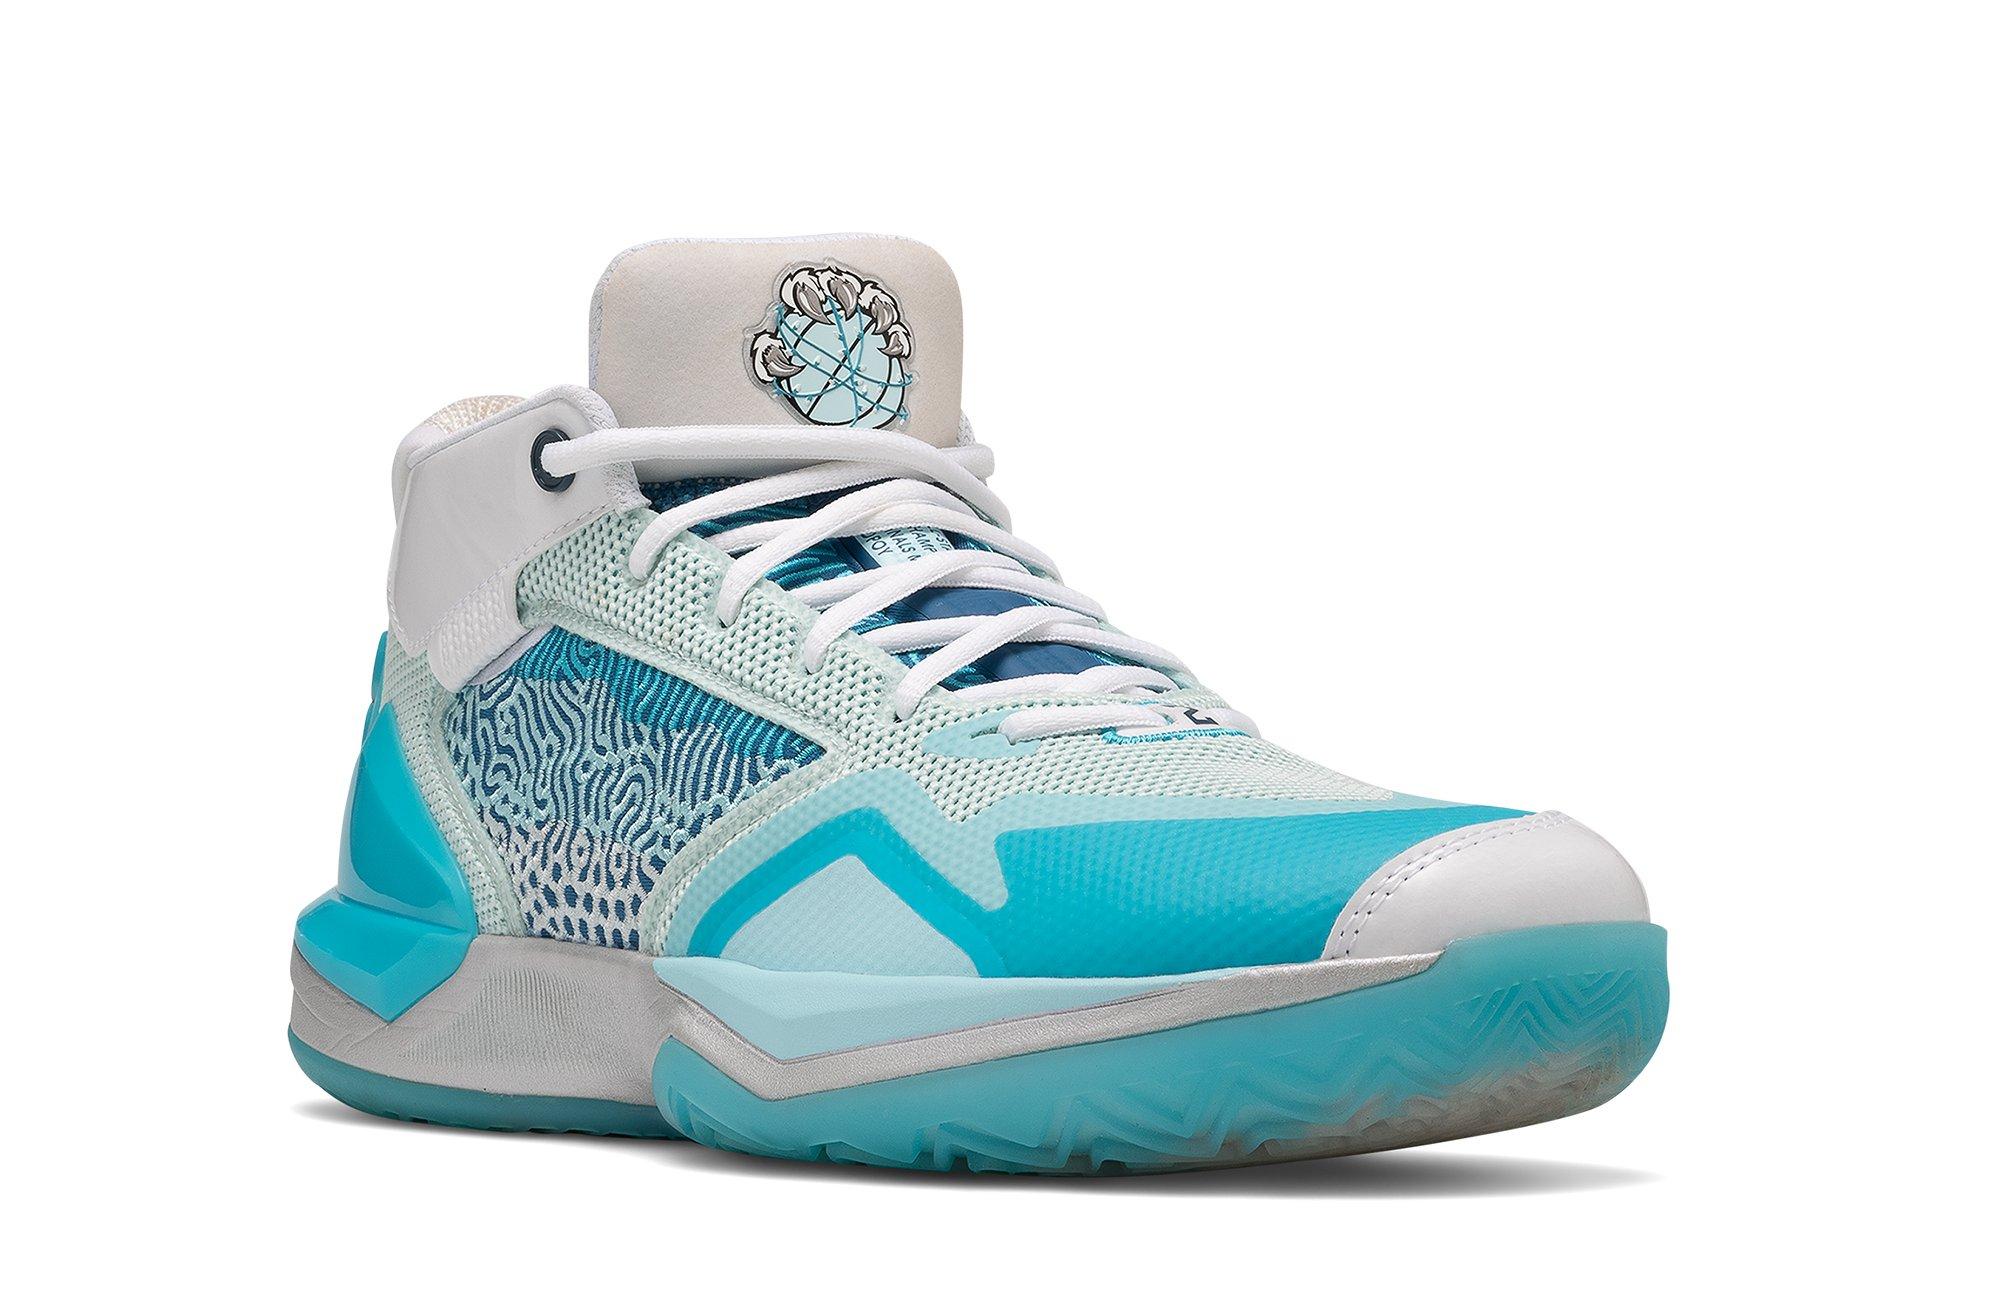 Sneakers Release New Balance “Kawhi for Christmas” Men’s Basketball Shoe